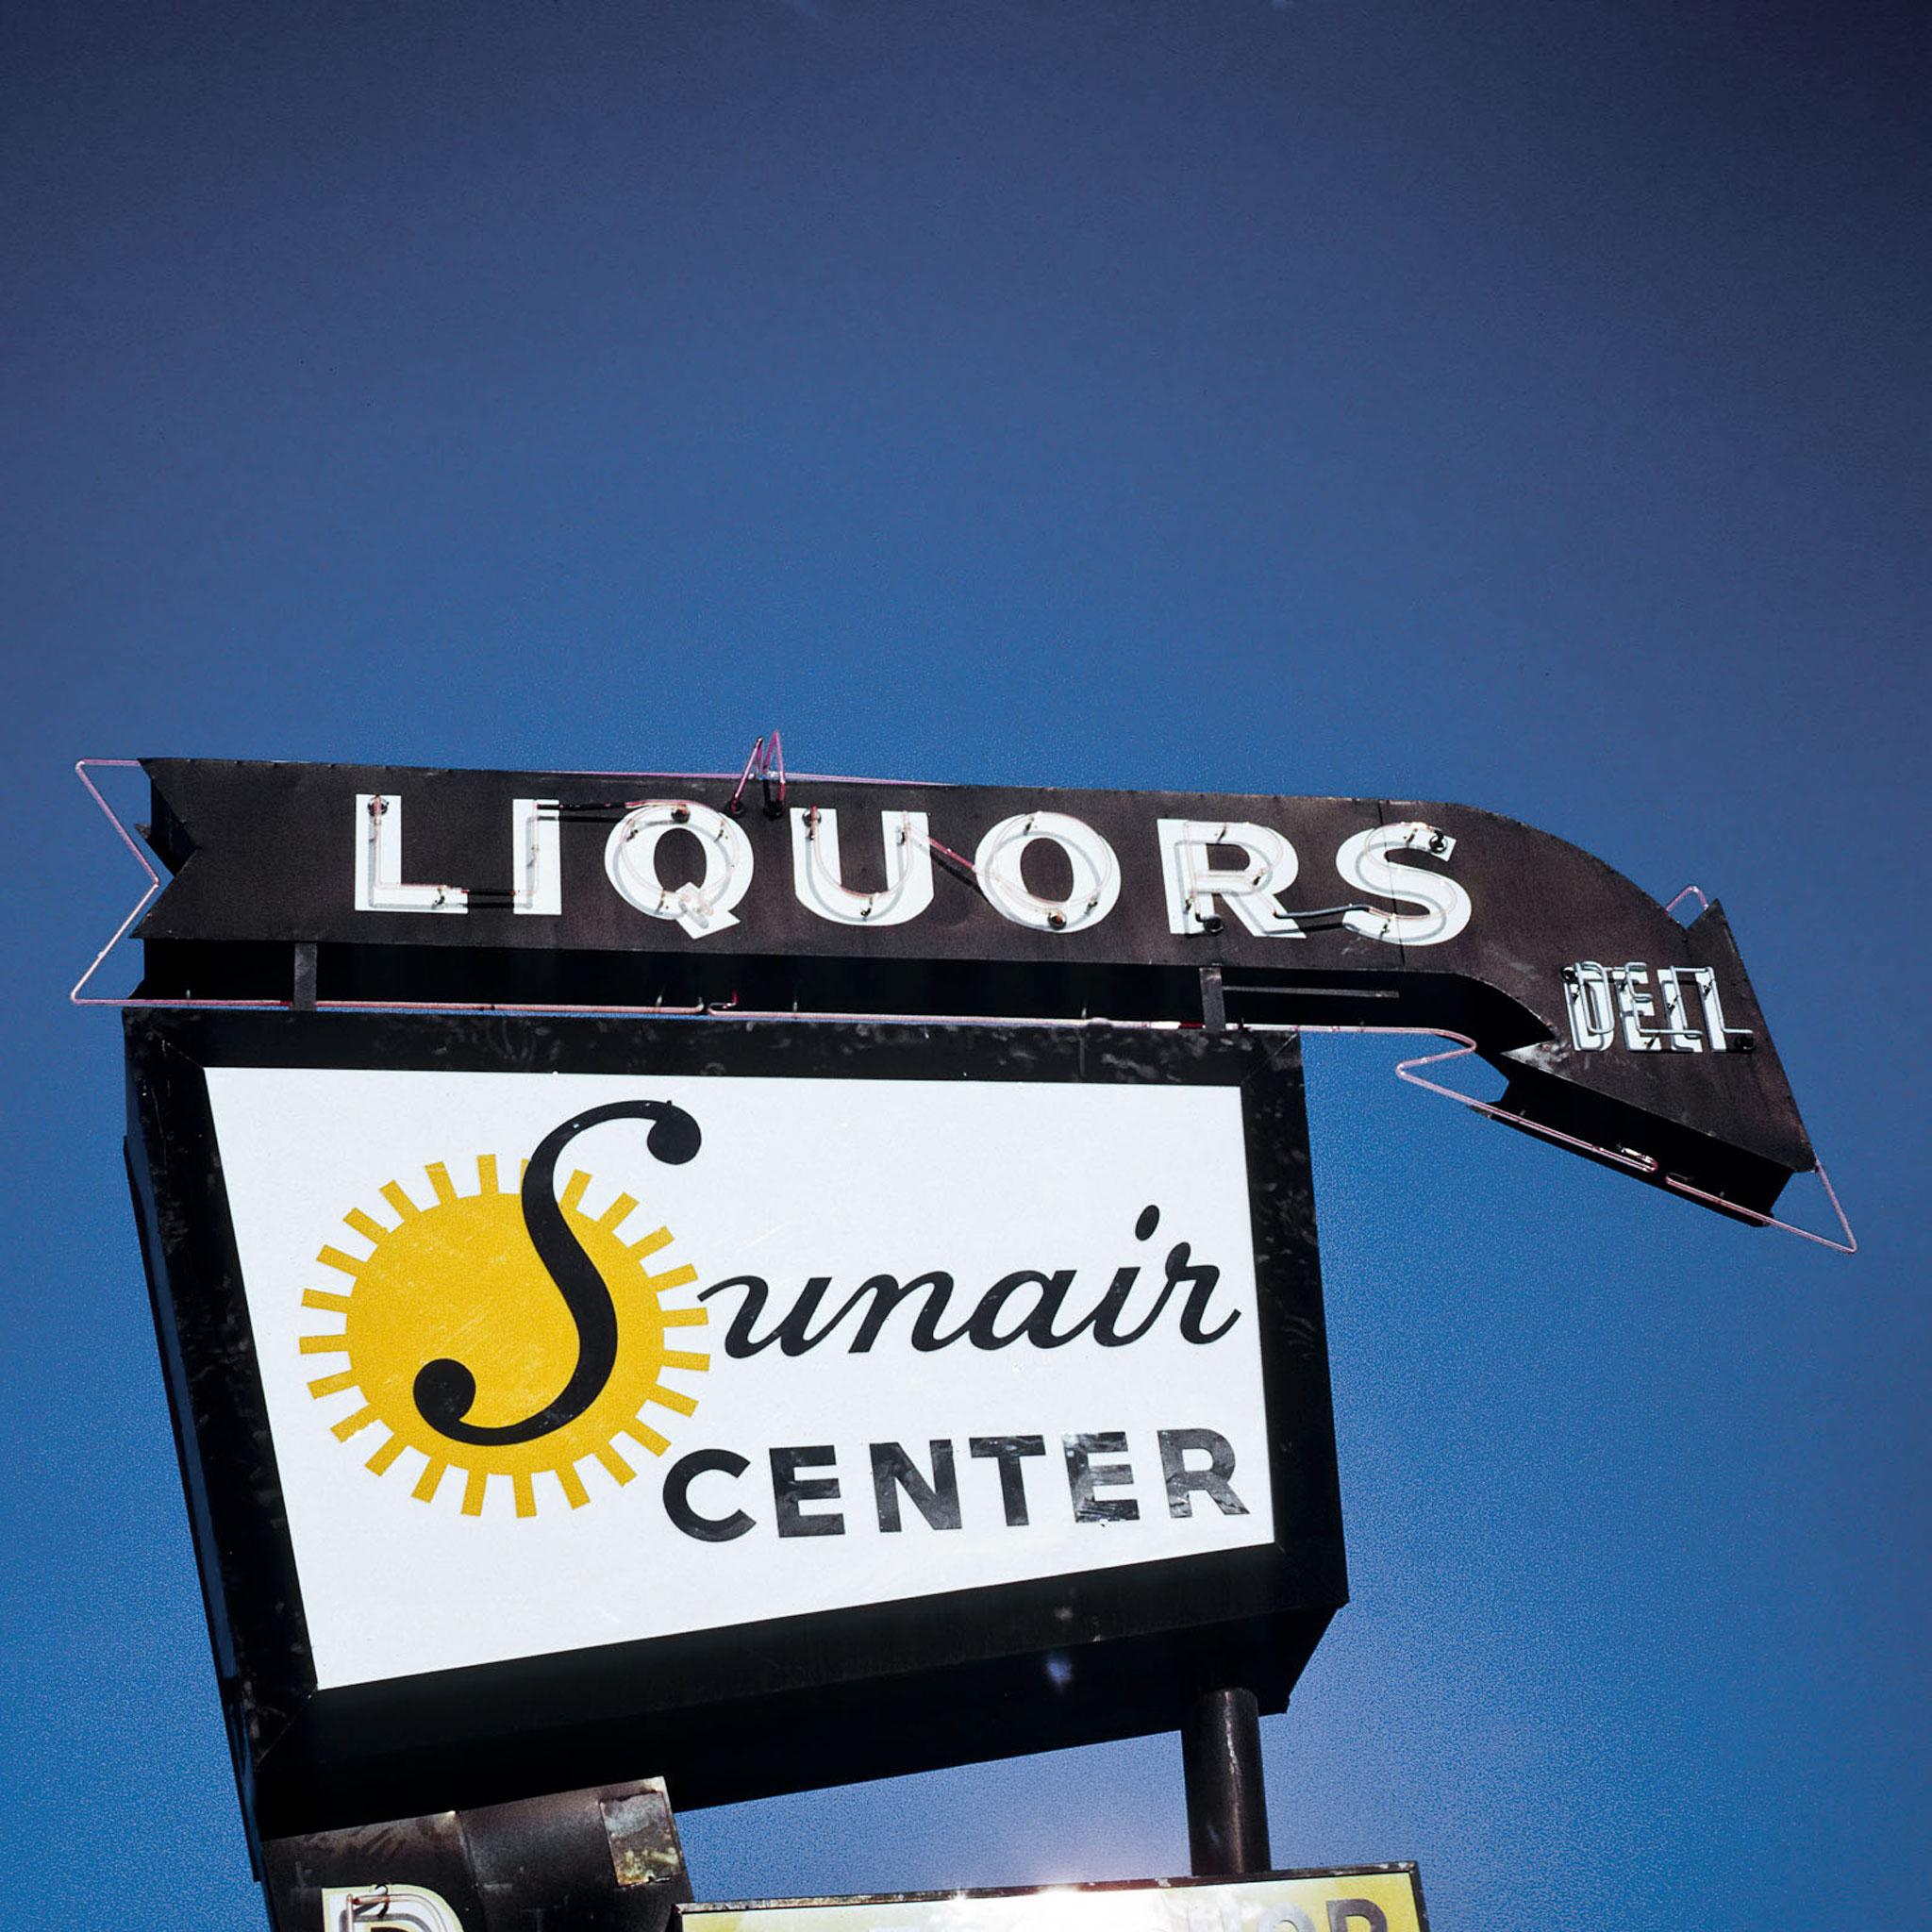 A sign against a blue sky that says "Sunair Center" and "Liquors, Deli"